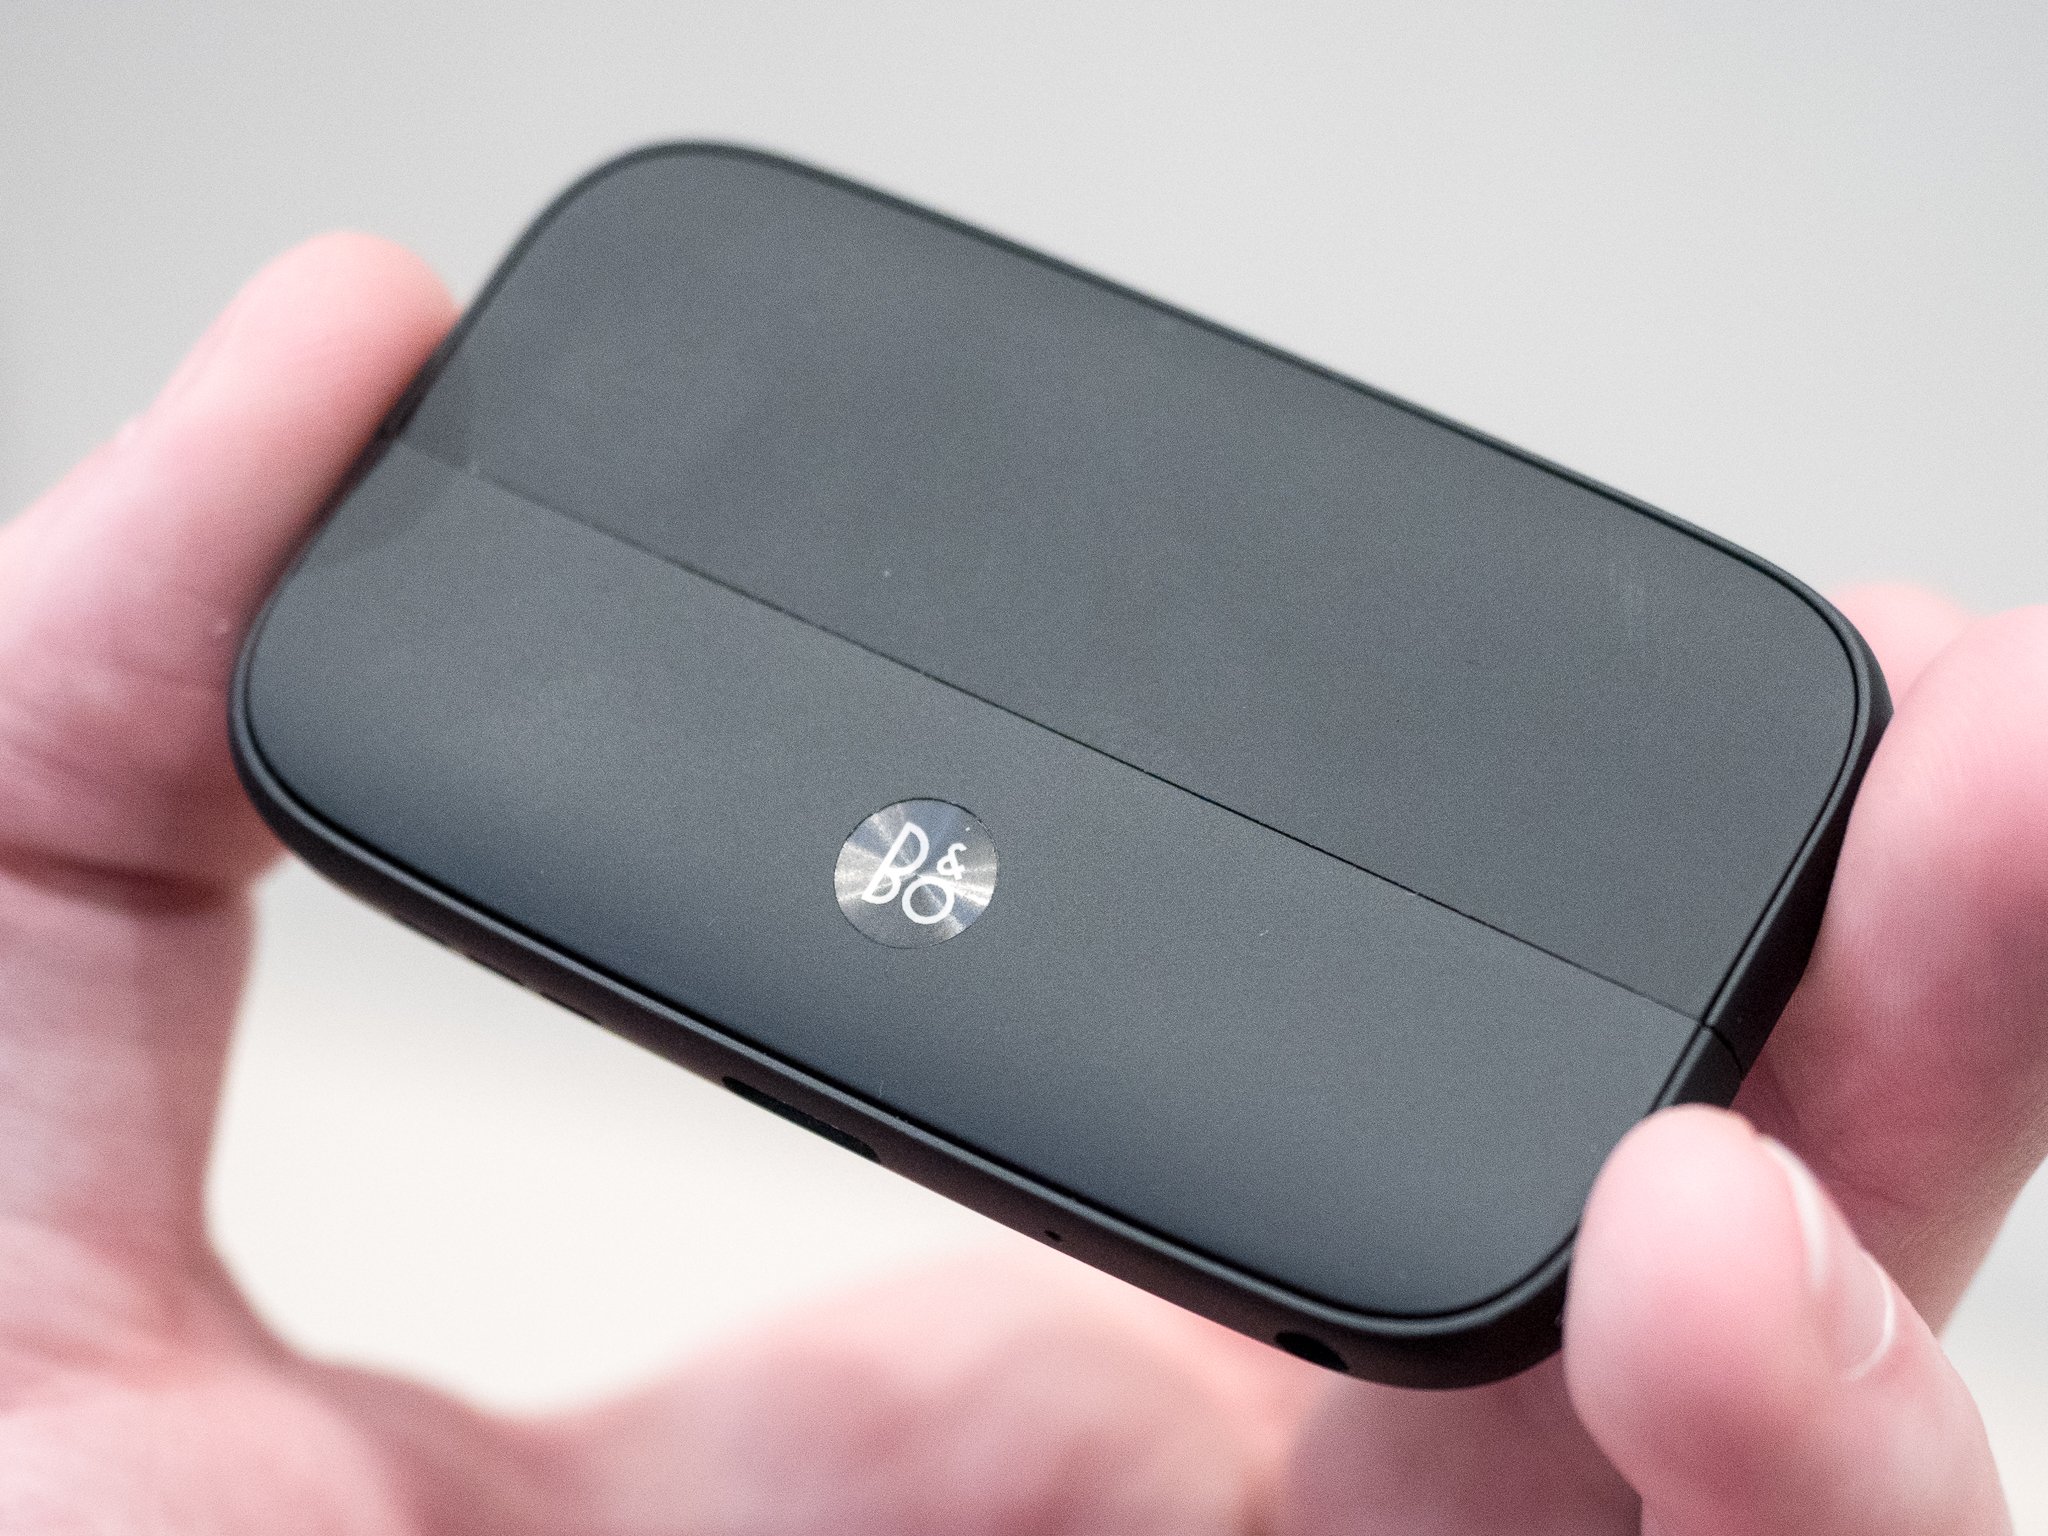 LG G5 tendrá audio Hi-Fi firmado por Bang & Olufsen